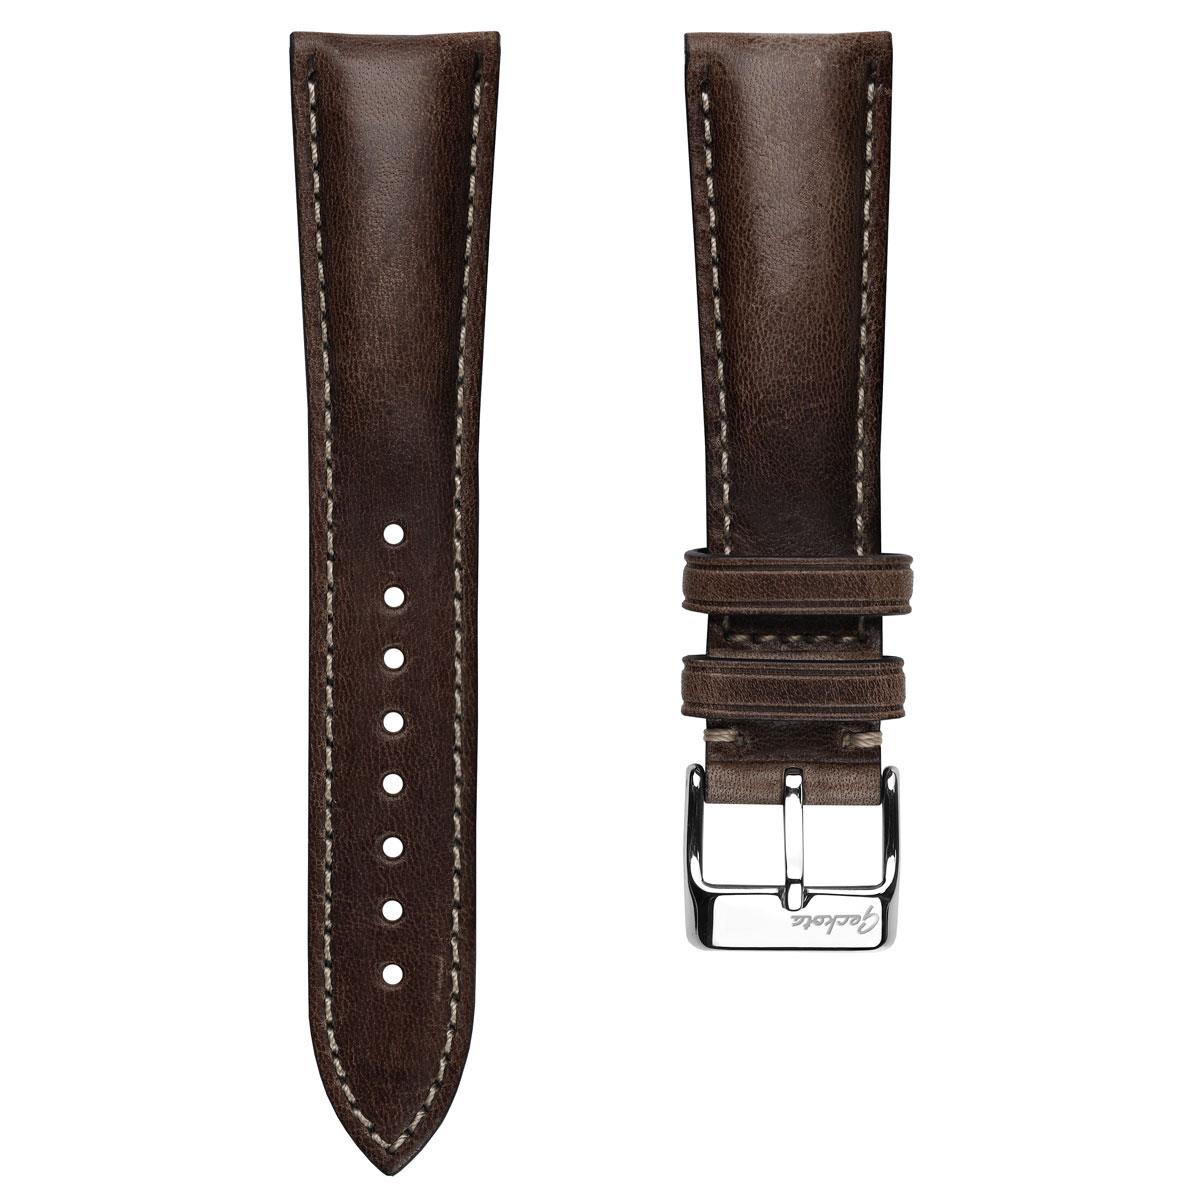 Geckota Vintage Highley Genuine Leather Watch Strap - Chocolate Brown